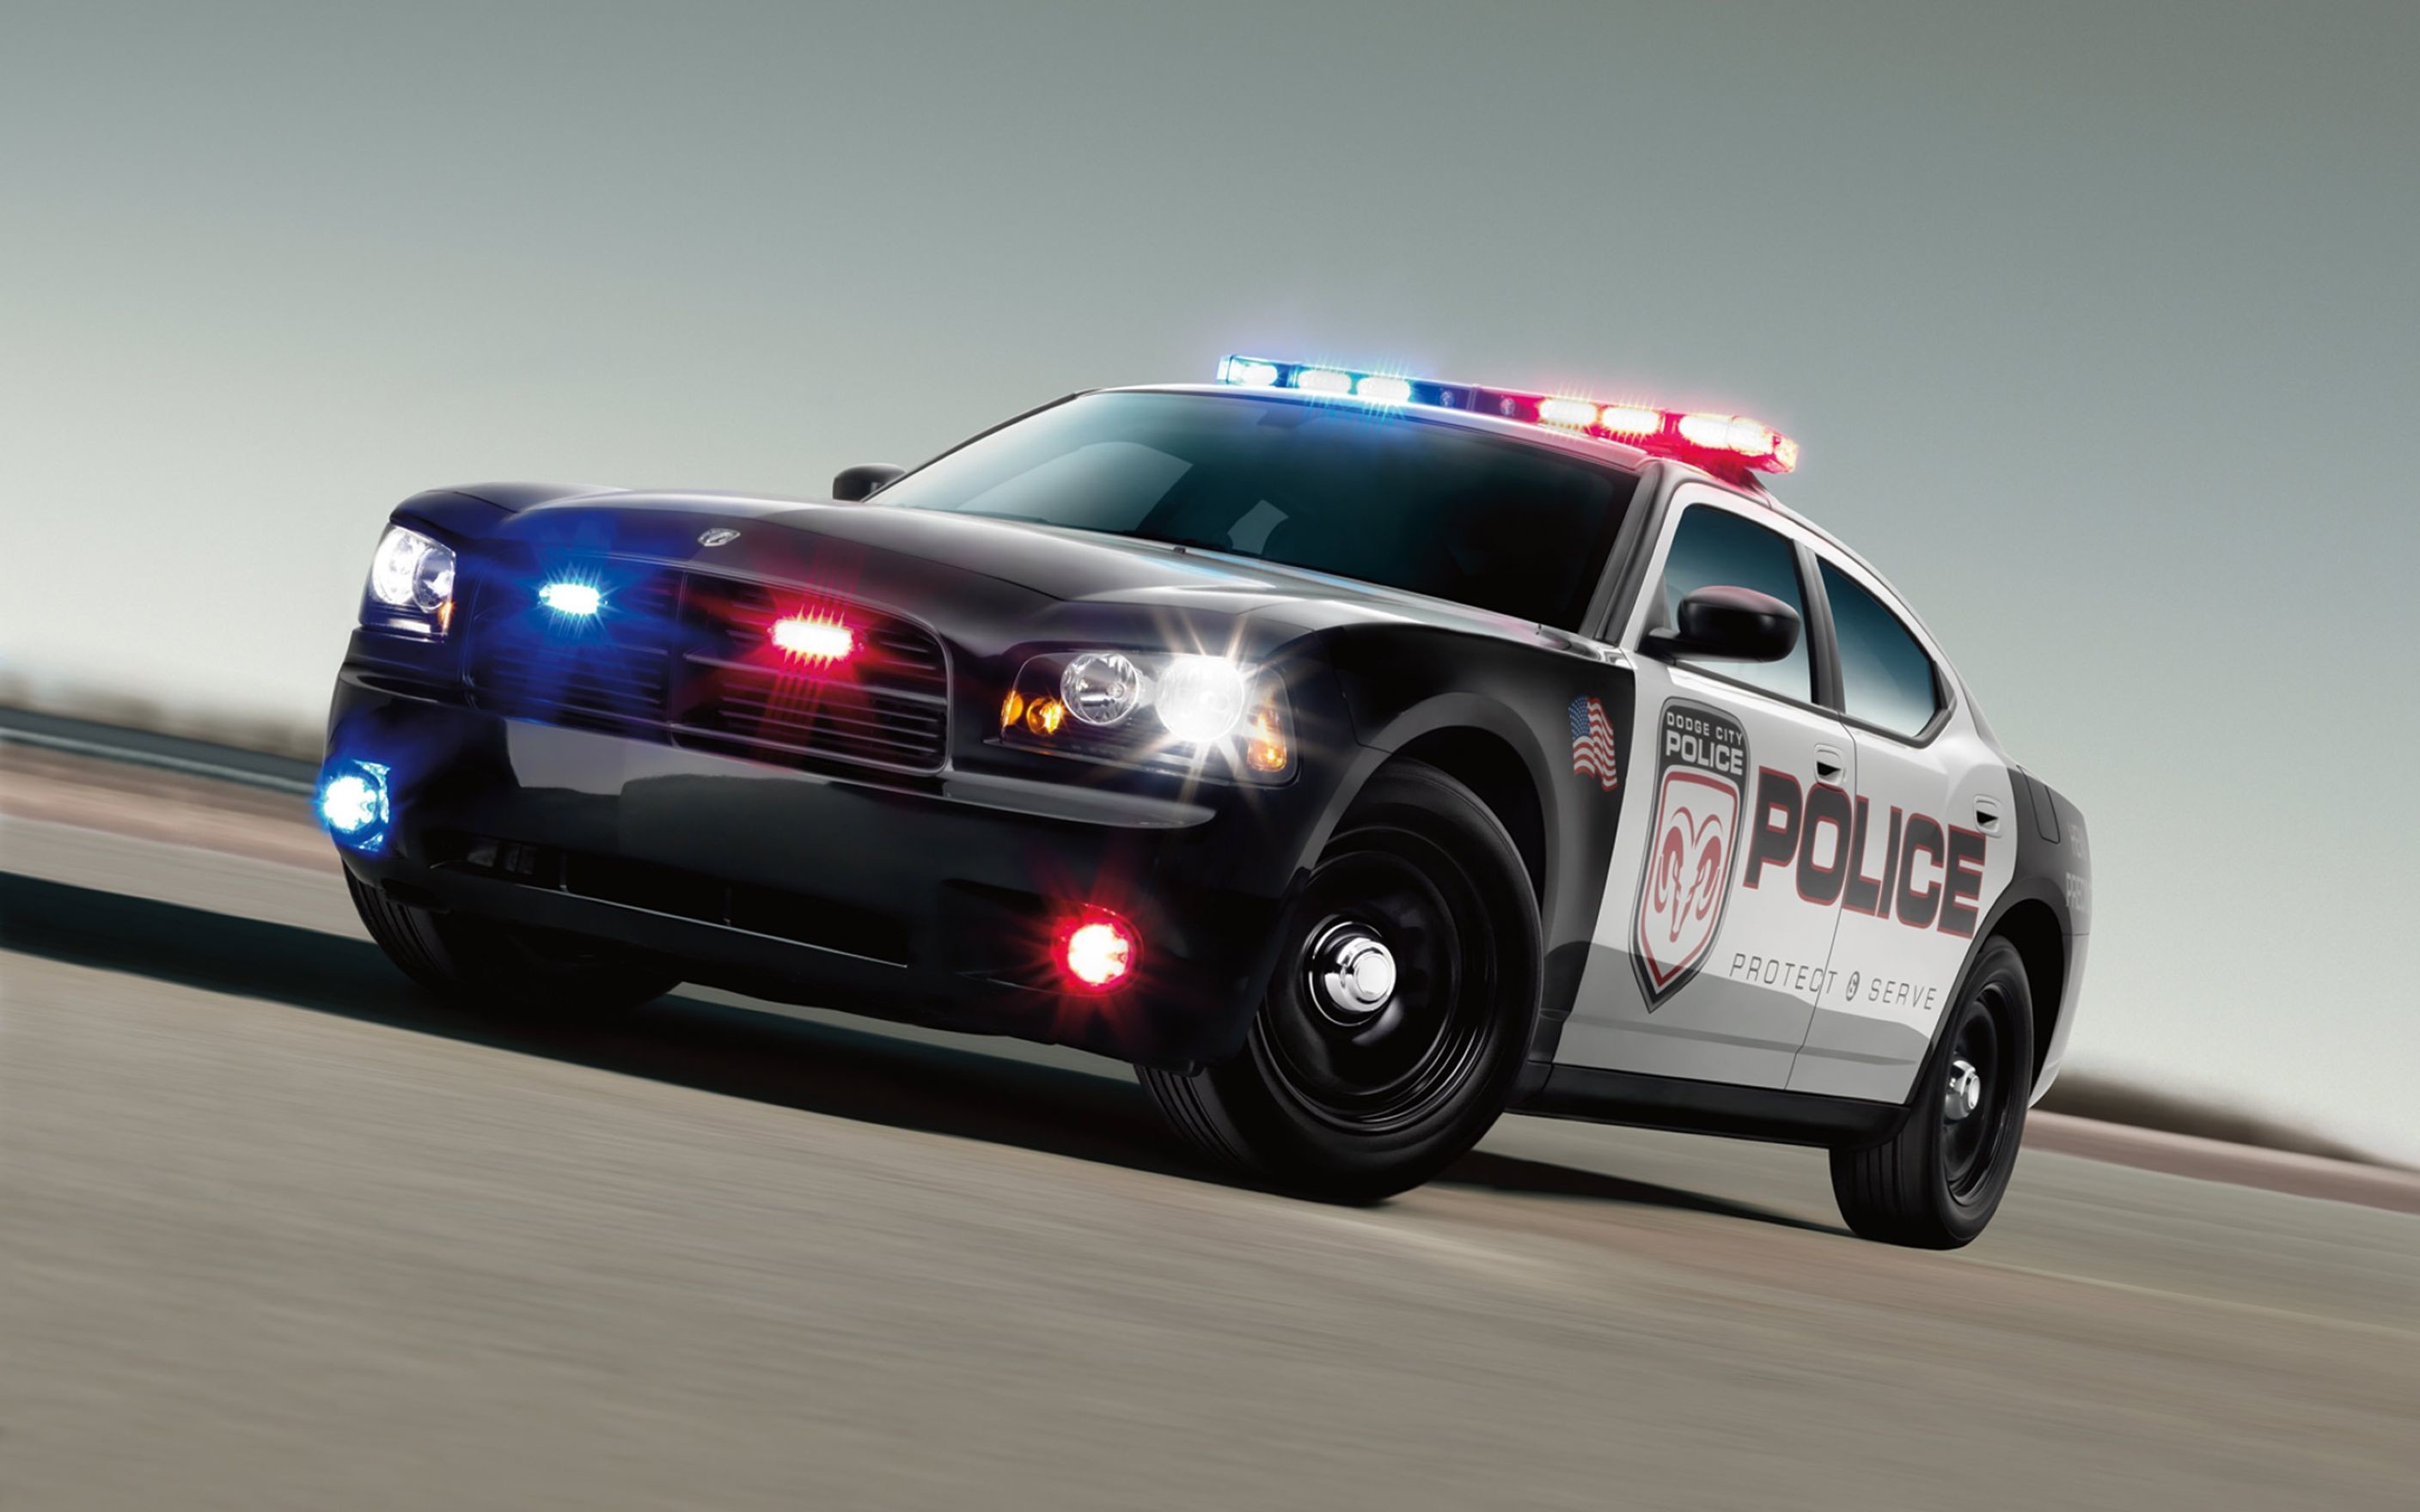 Policeman speed. Dodge Charger Police Interceptor 2011. Полицейский Додж Чарджер. Додж Чарджер 2010 полиция. Додж Чарджер полиция.